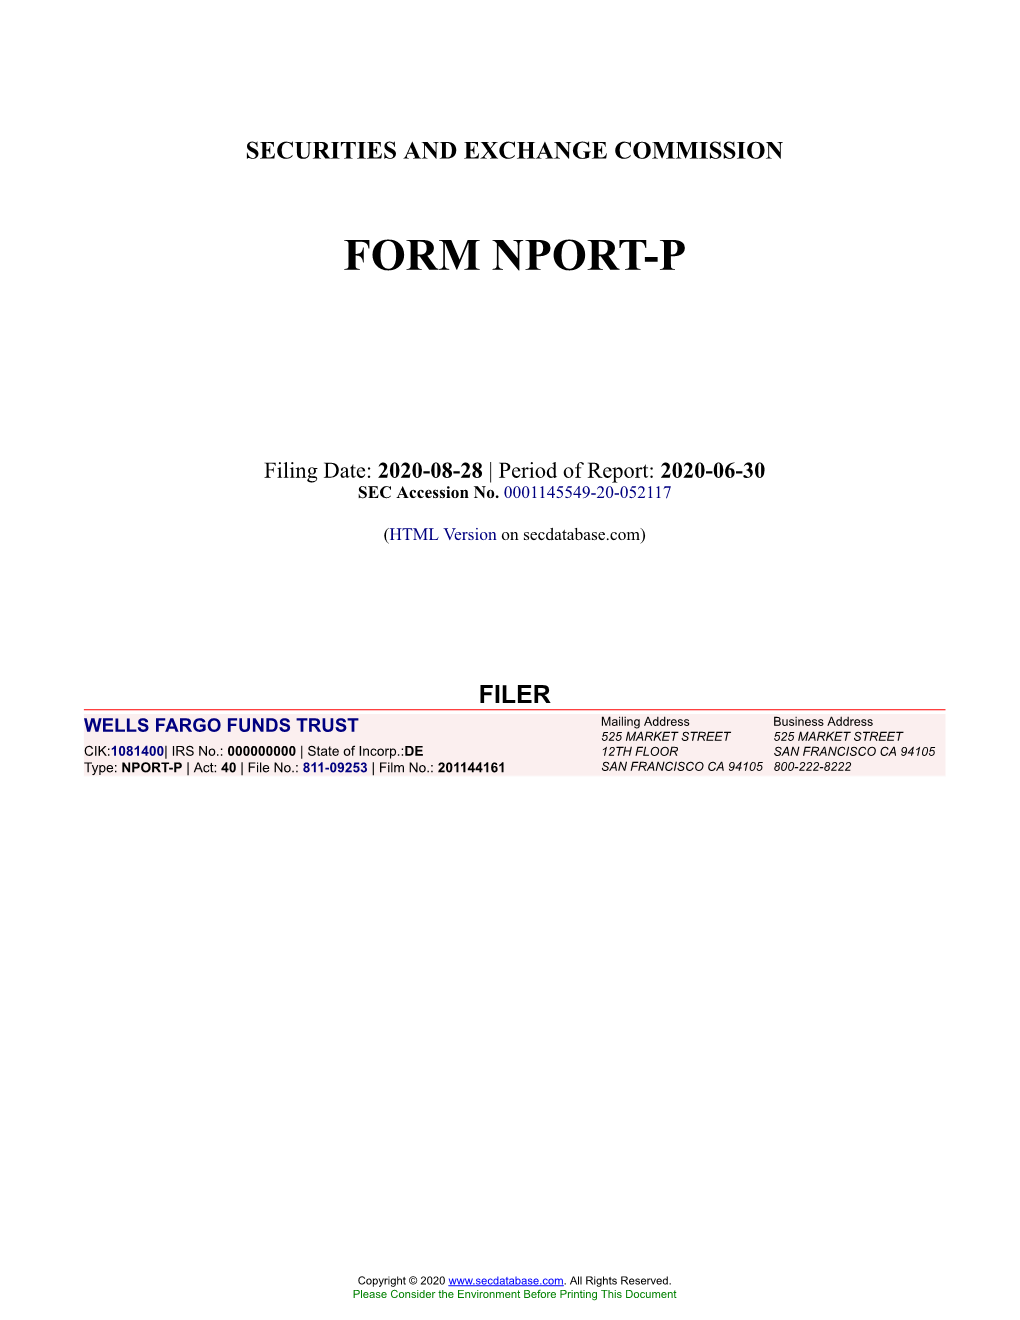 WELLS FARGO FUNDS TRUST Form NPORT-P Filed 2020-08-28